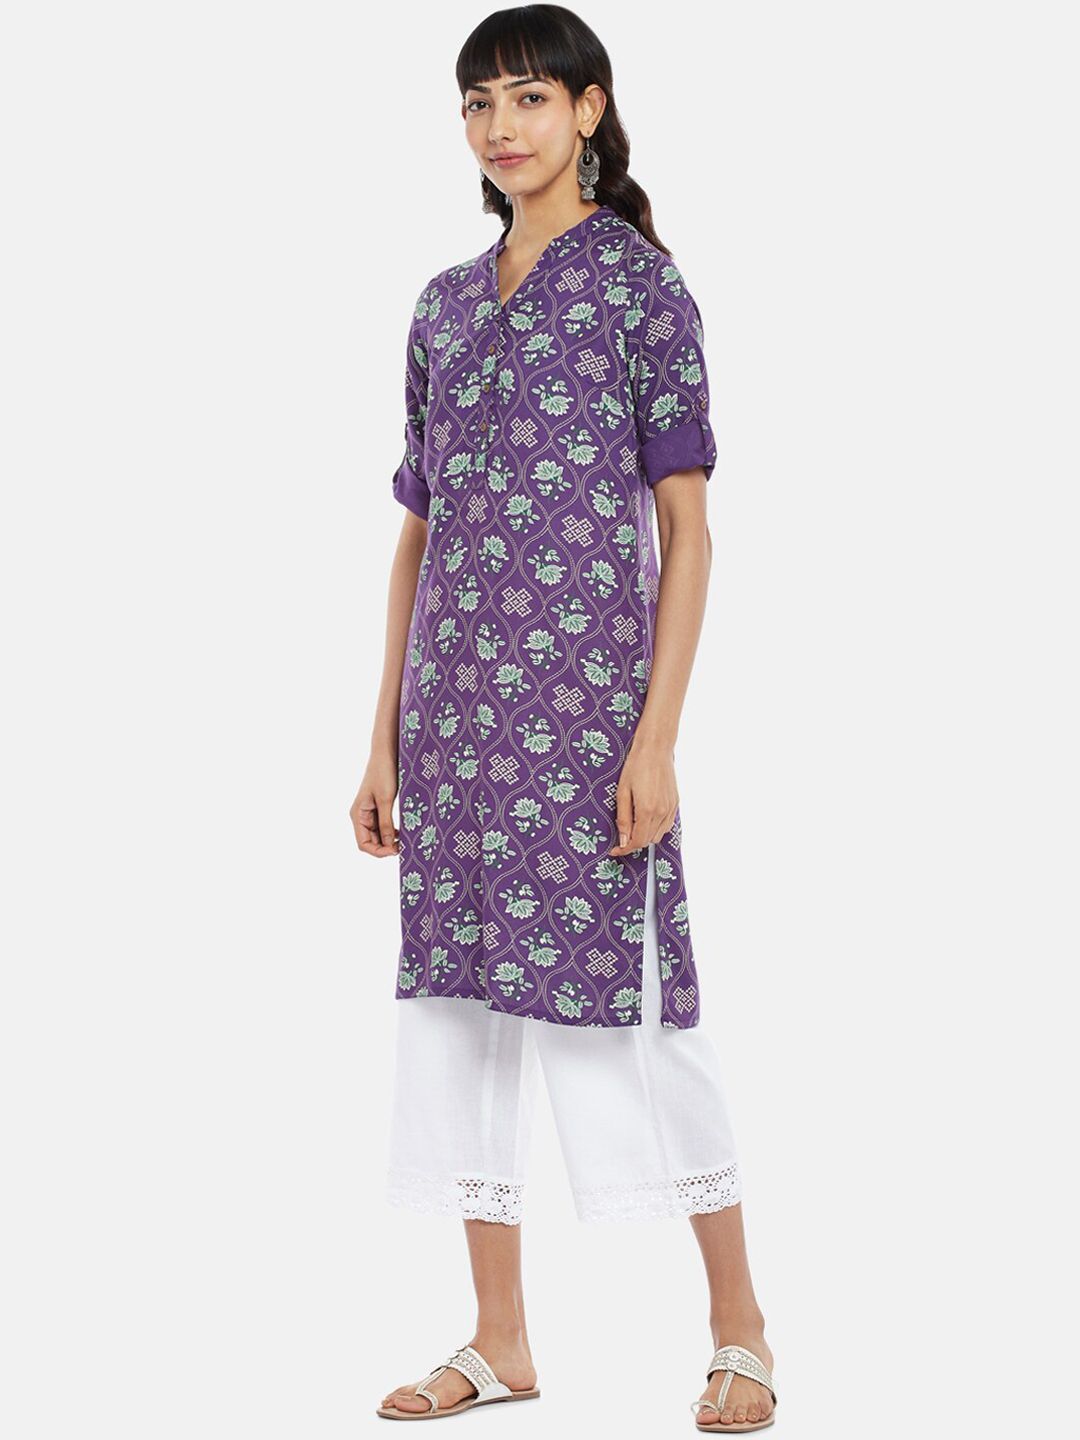 RANGMANCH BY PANTALOONS Women Purple Floral Printed Thread Work Pathani Kurta Price in India